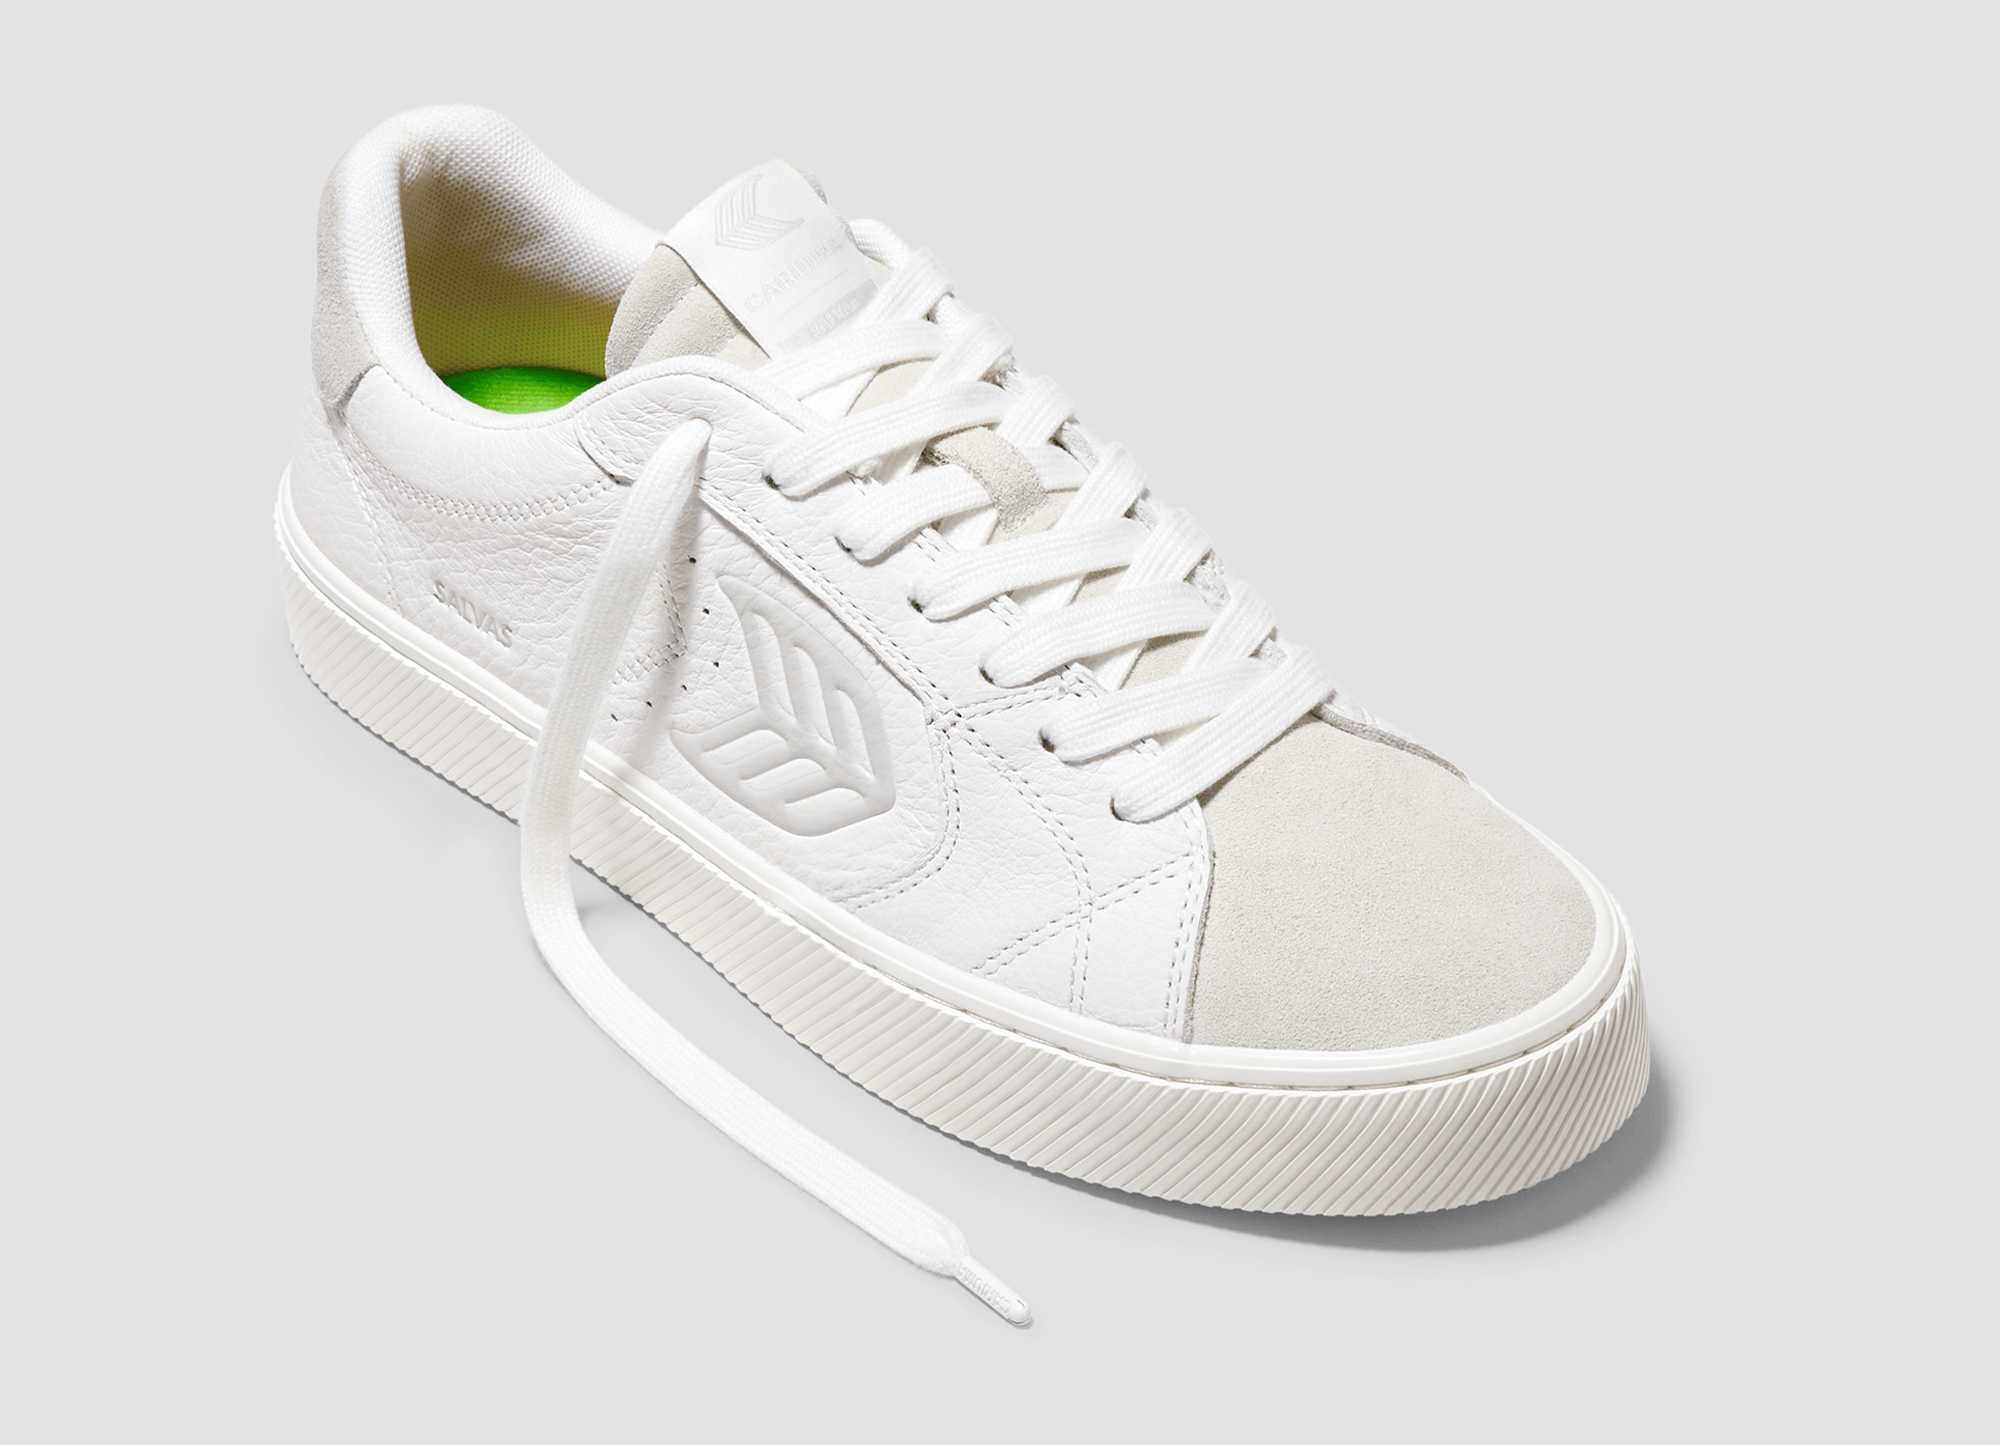 Premium Shoe Whitener | Scuff Cover to Whiten Leather Sneakers Shoes White  Polish Cover to Repair Marks 50ML - Walmart.com